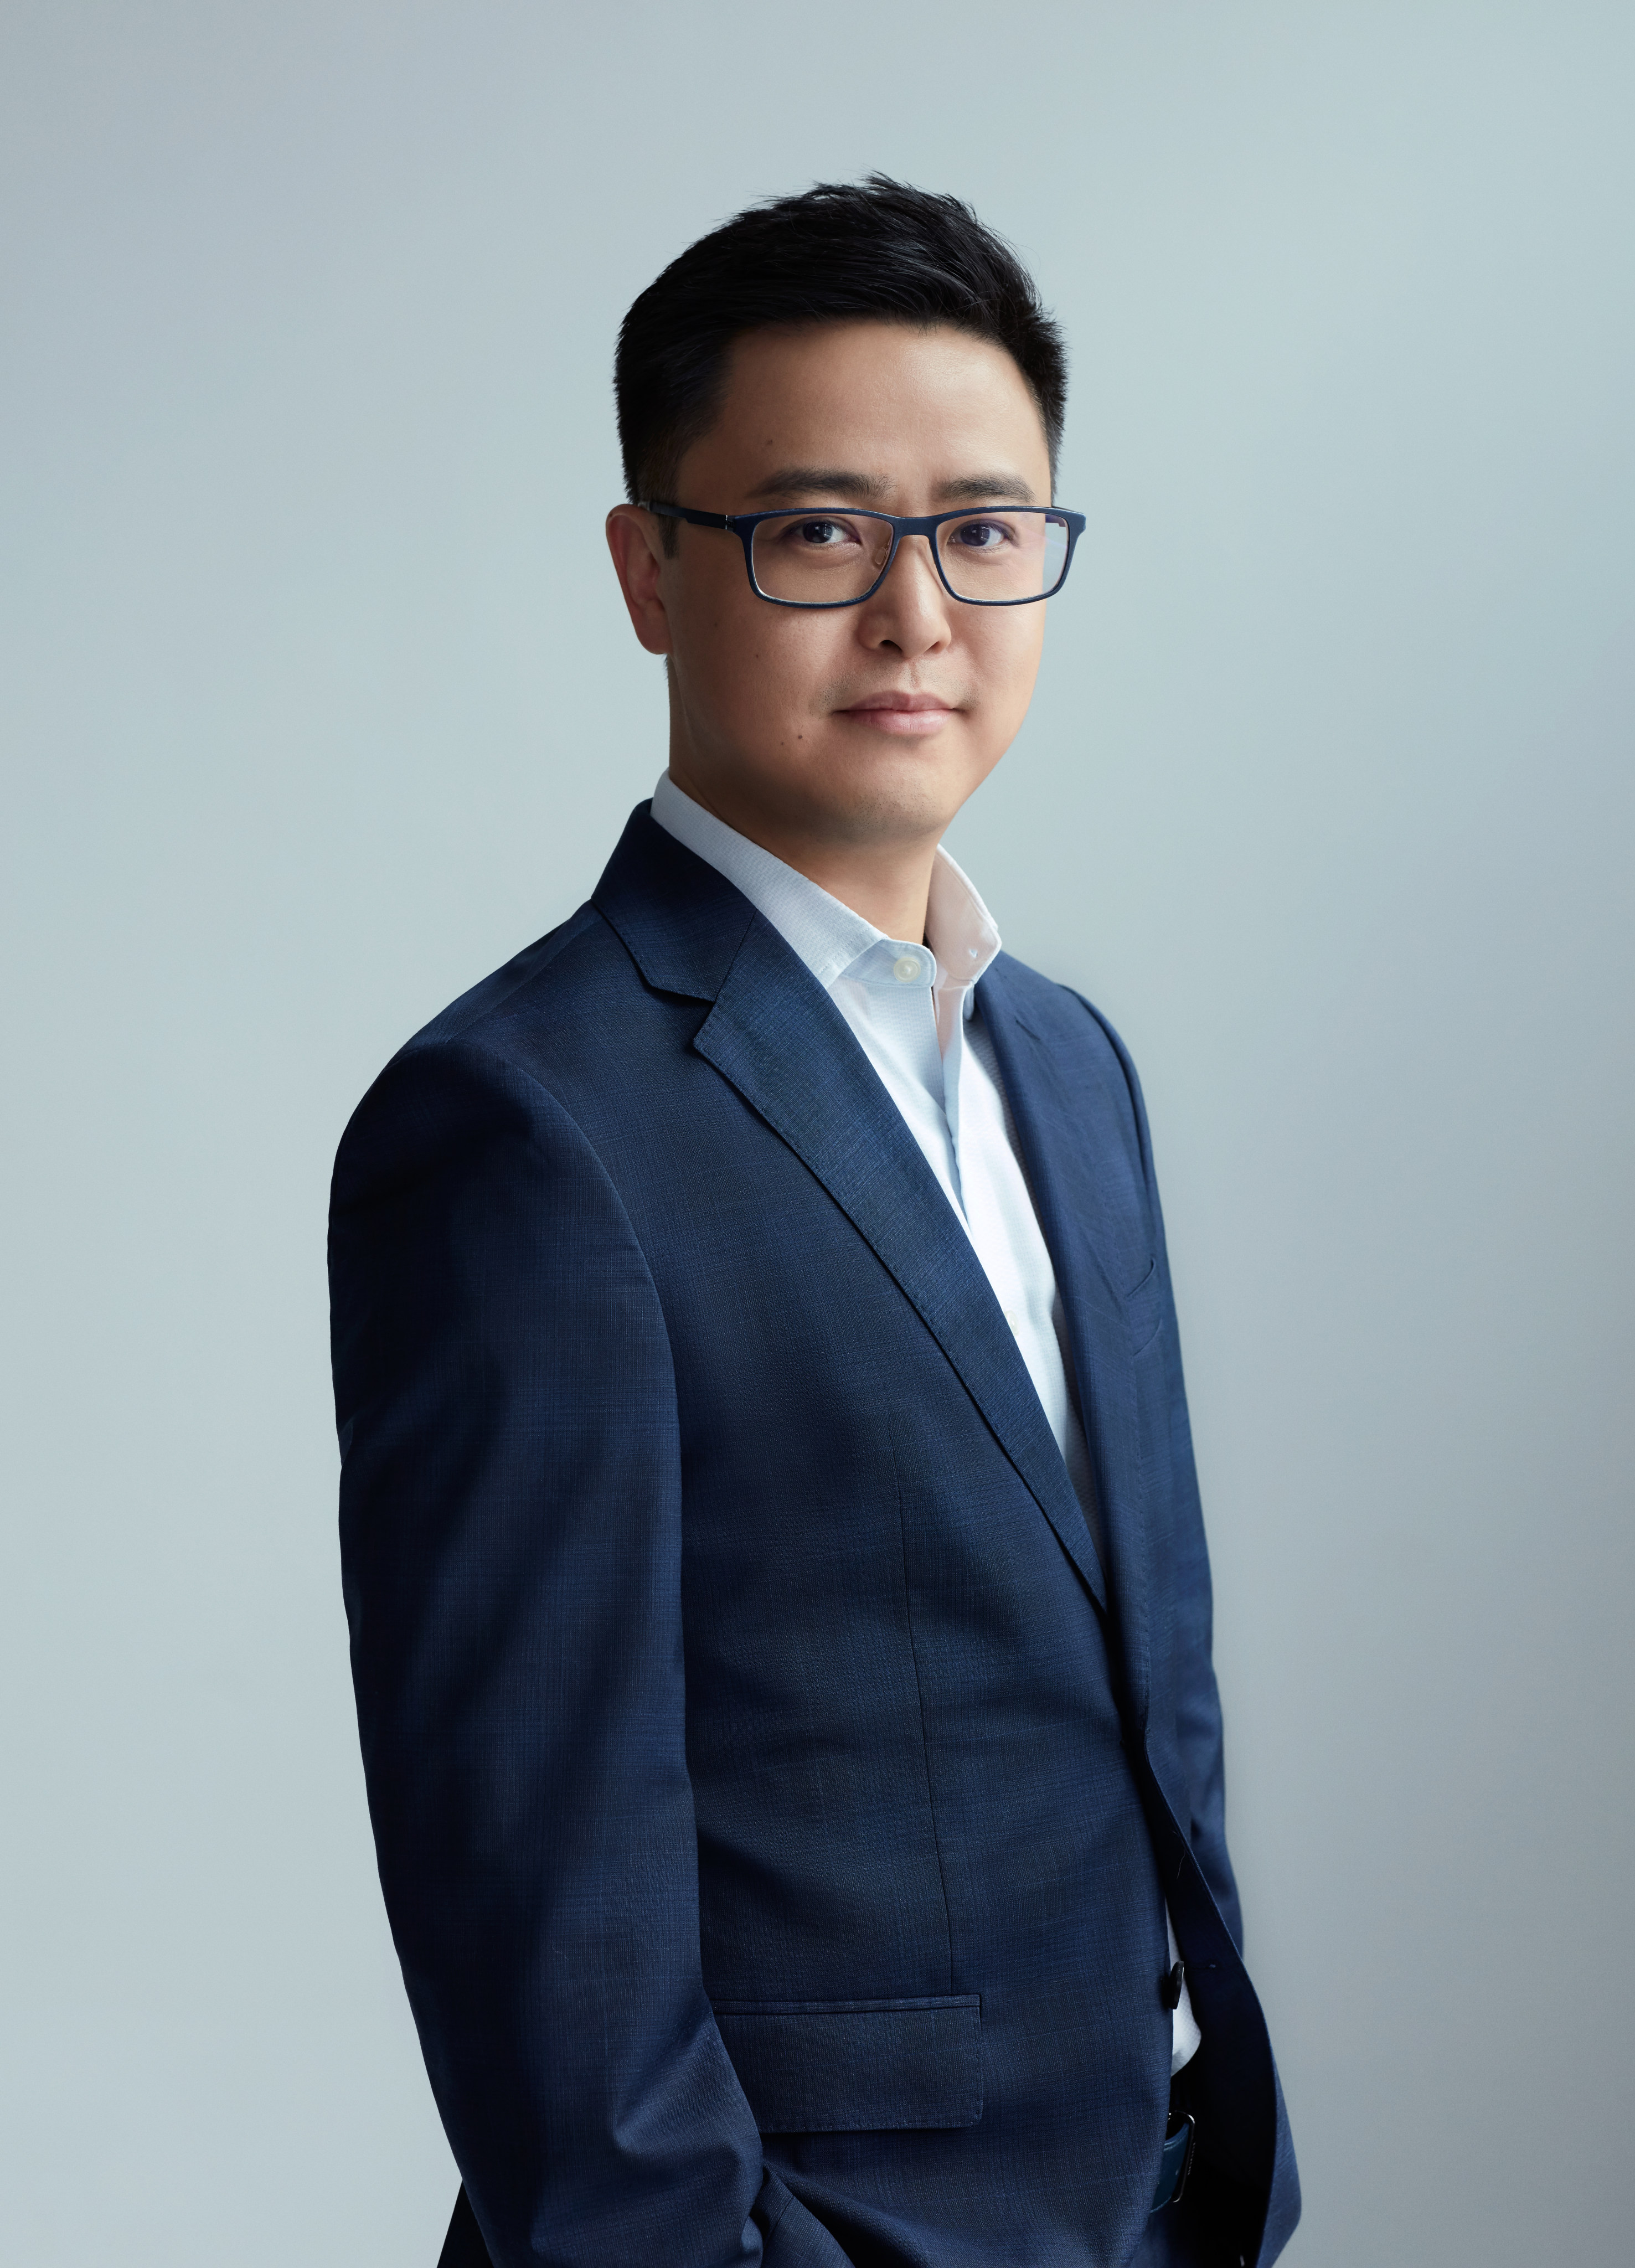 Zhou Lihan, co-founder and CEO